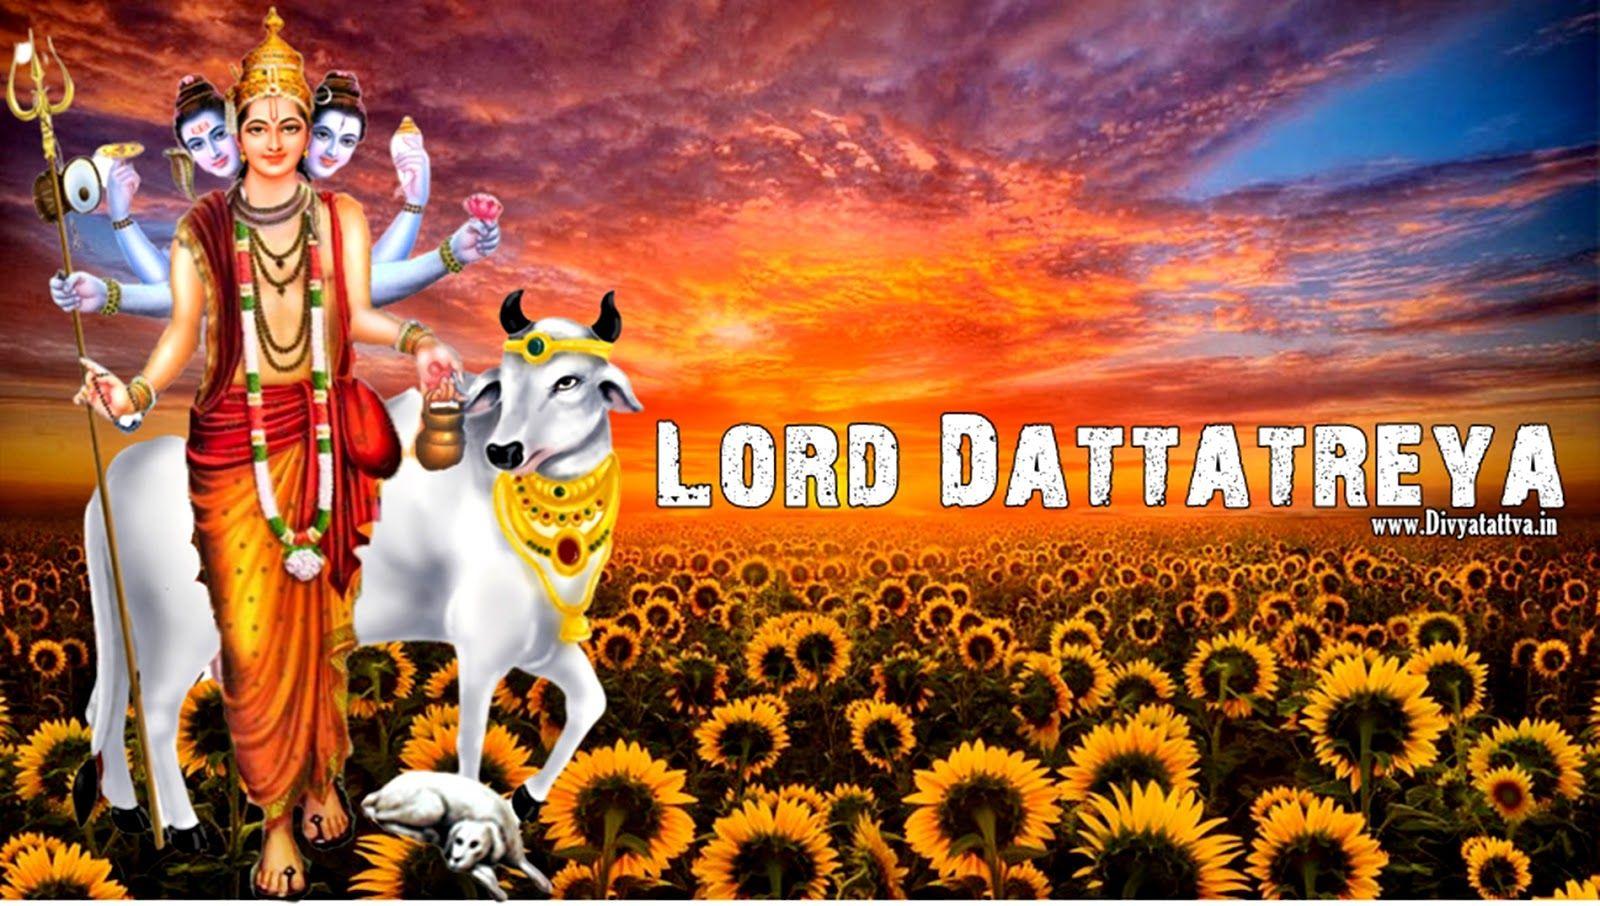 Download Hindu God Lord Dattatreya Picture | Wallpapers.com